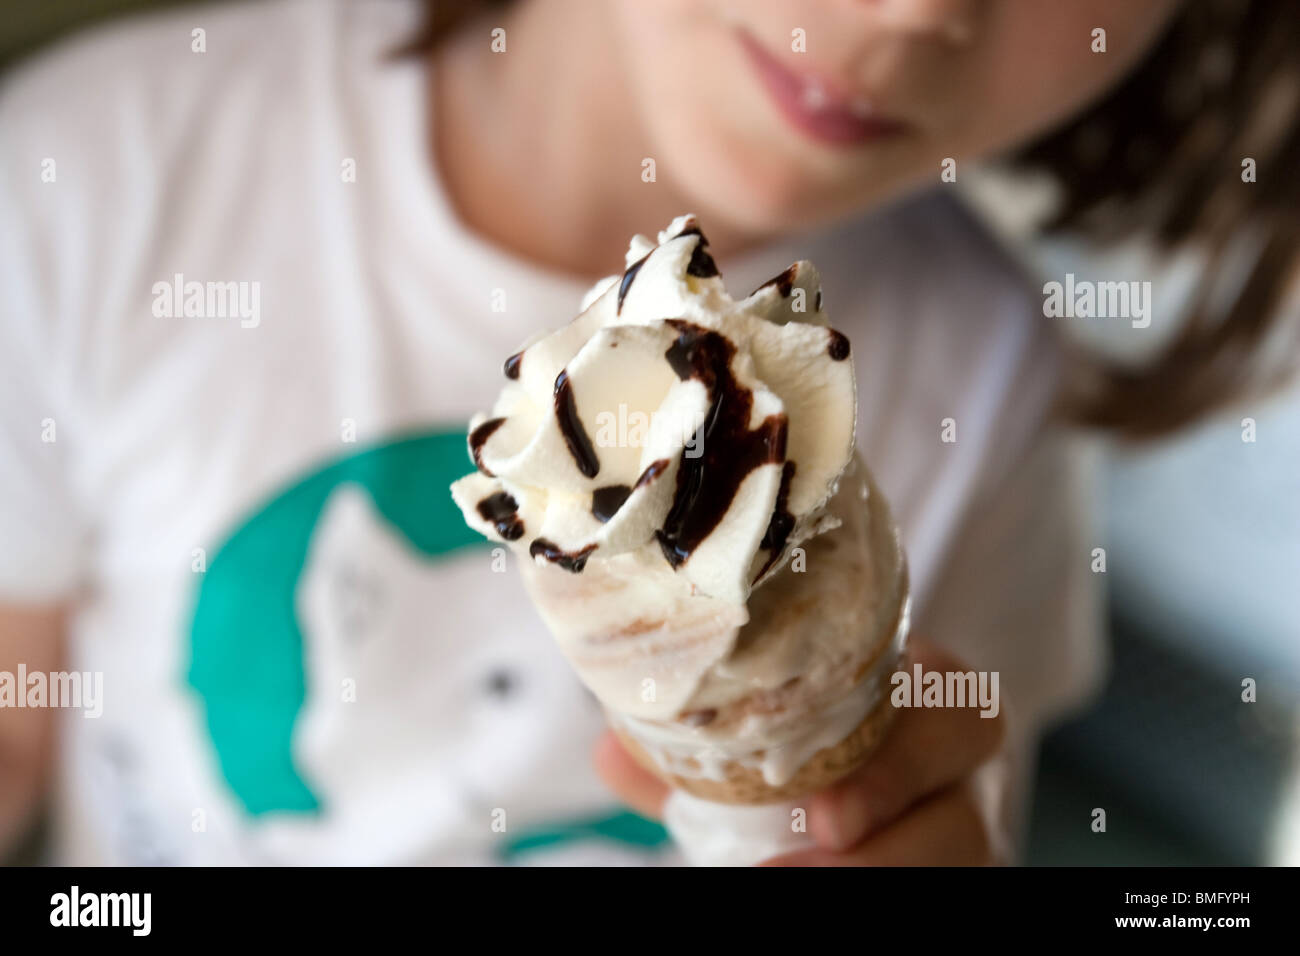 Girl eating "ice cream" gelato cone outdoor in Italy. Stock Photo